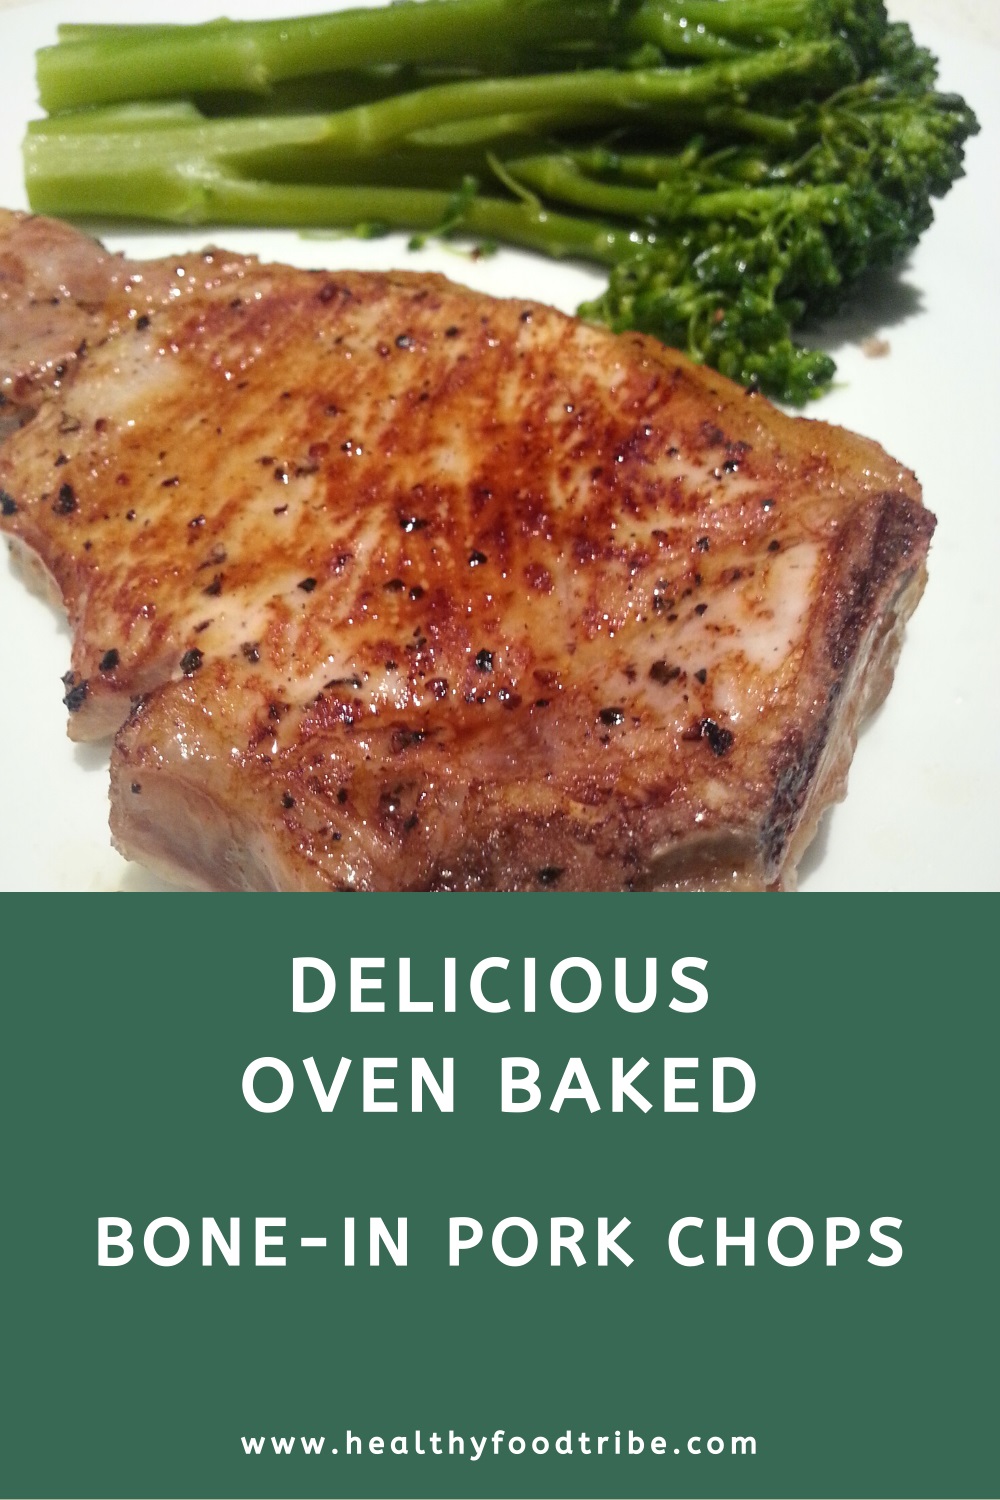 Oven baked bone-in pork chops recipe